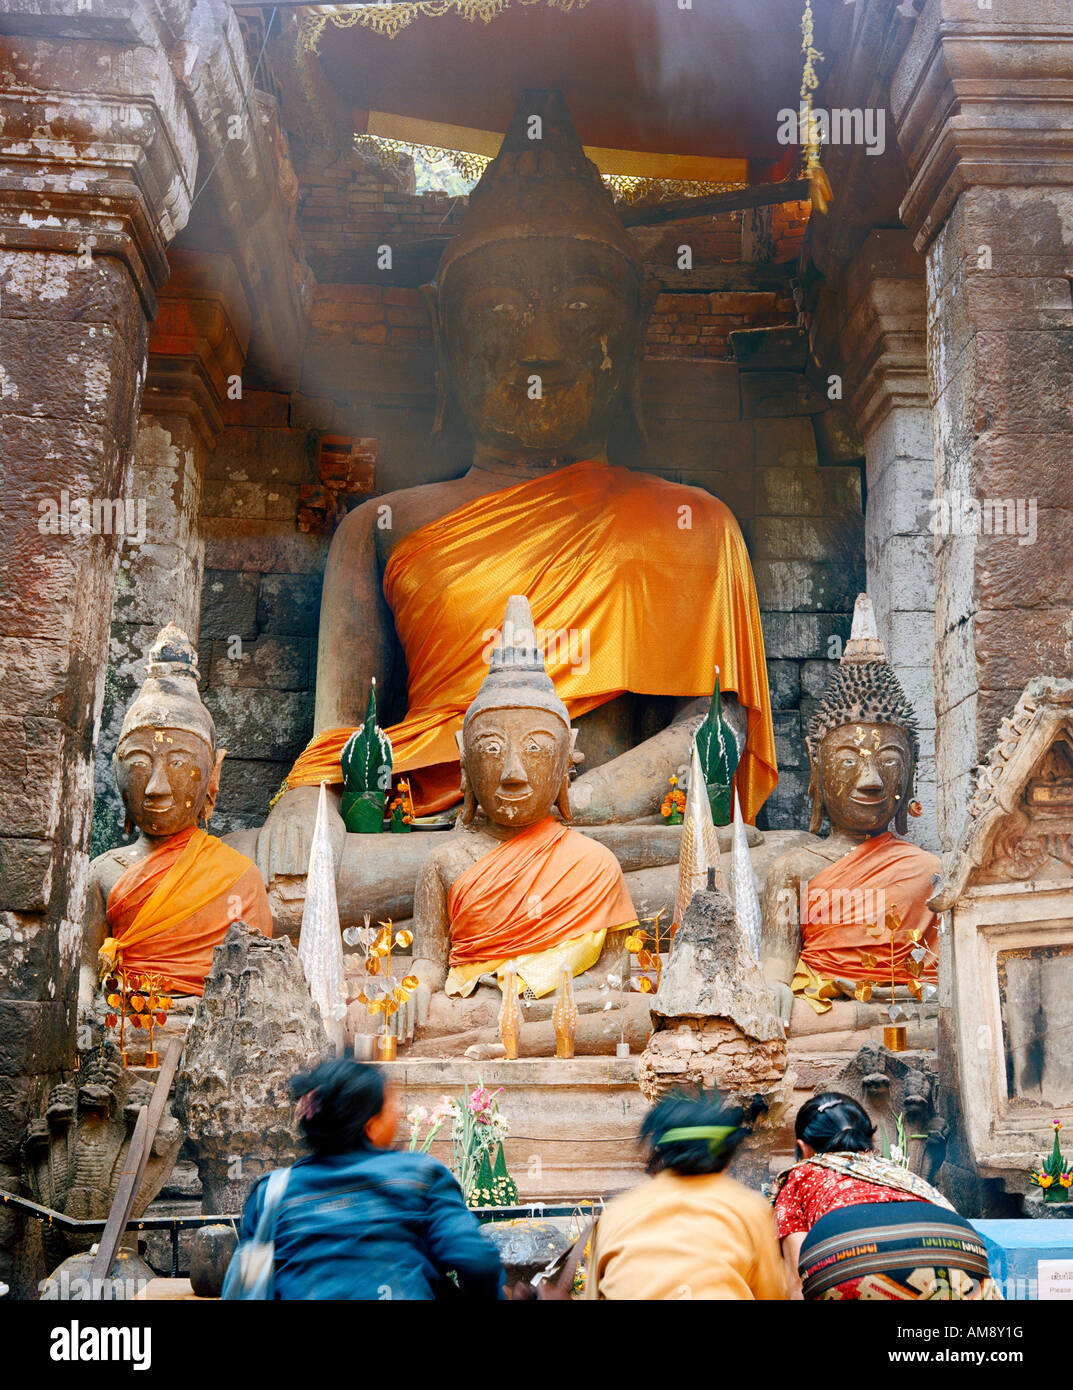 Tempels Wat Phou in Champasak mit 4 koboldartigen Buddhas main sanctuary of a buddhistic temple with gremlin like figures Stock Photo